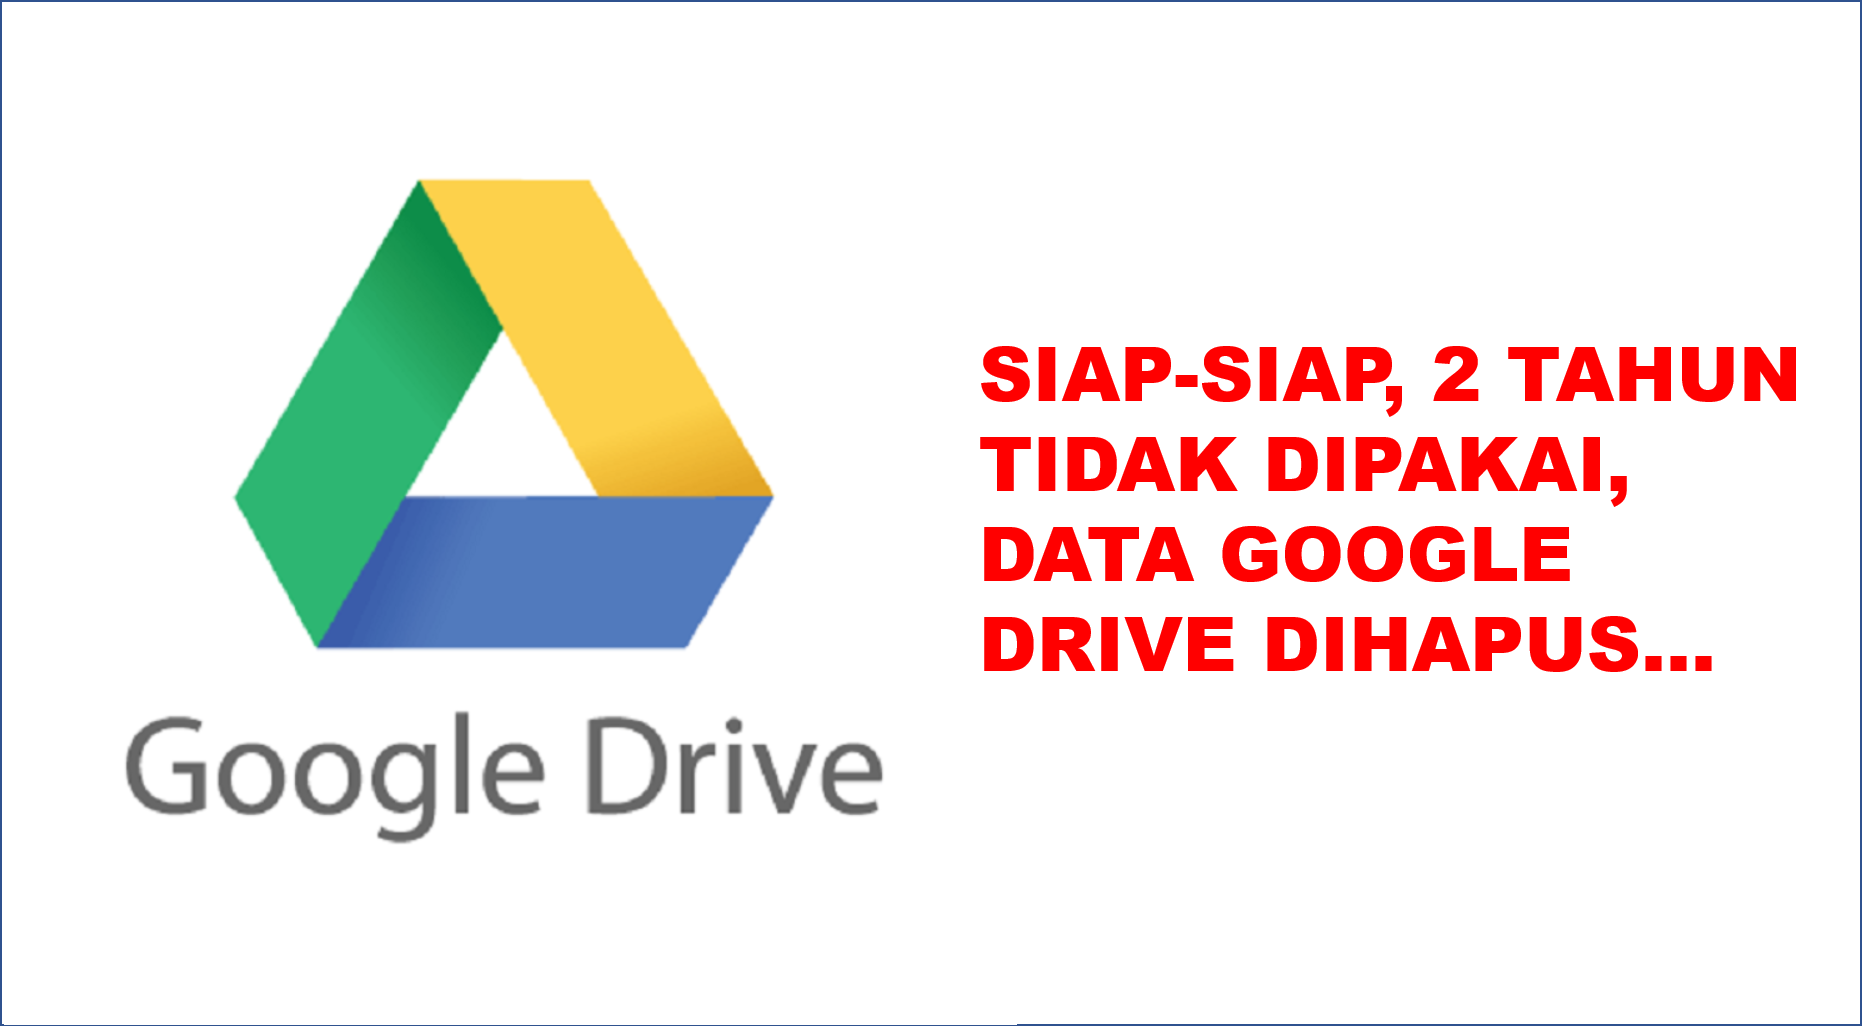 data_google_drive_dihapus